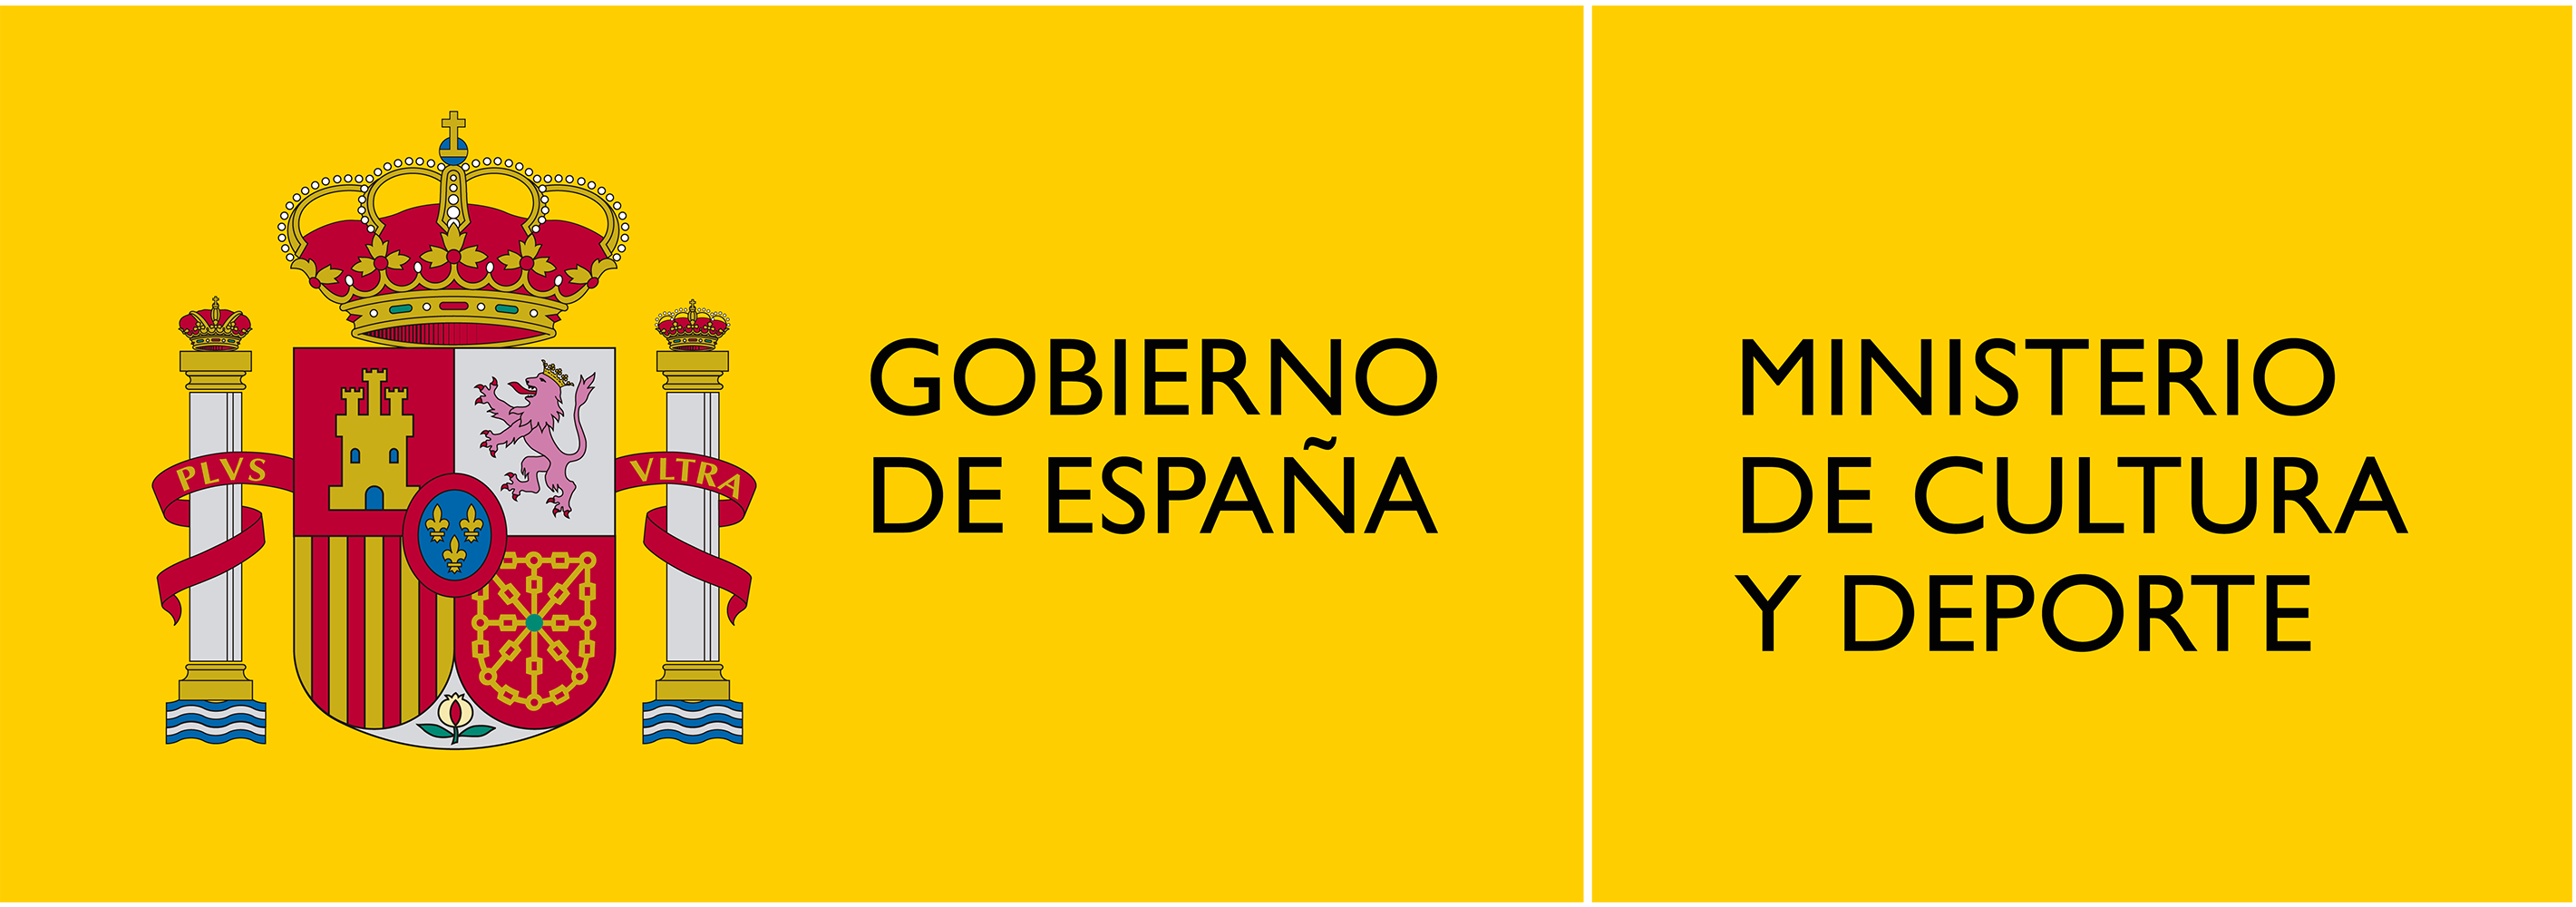 Gobierno De Espana, Ministerio De Cultura Y Deporte